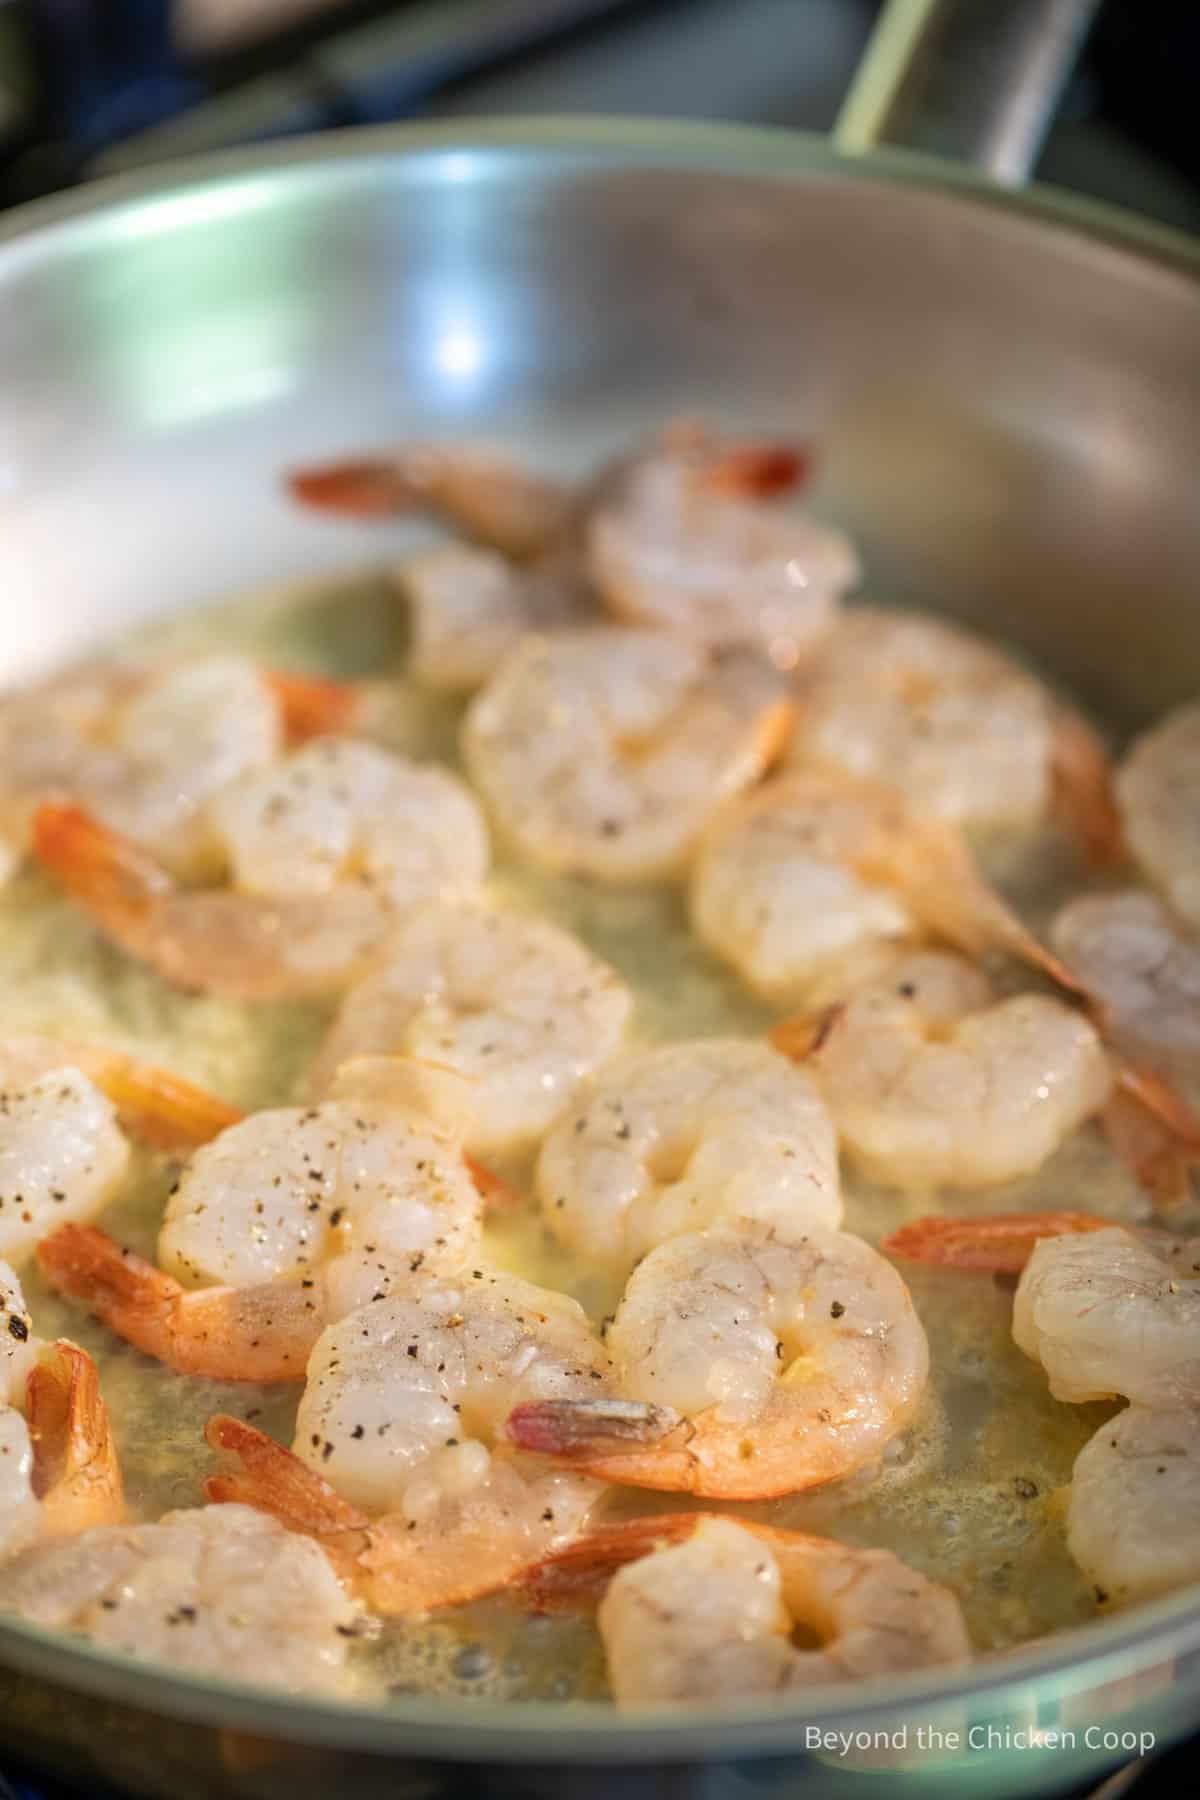 Shrimp in a frying pan.